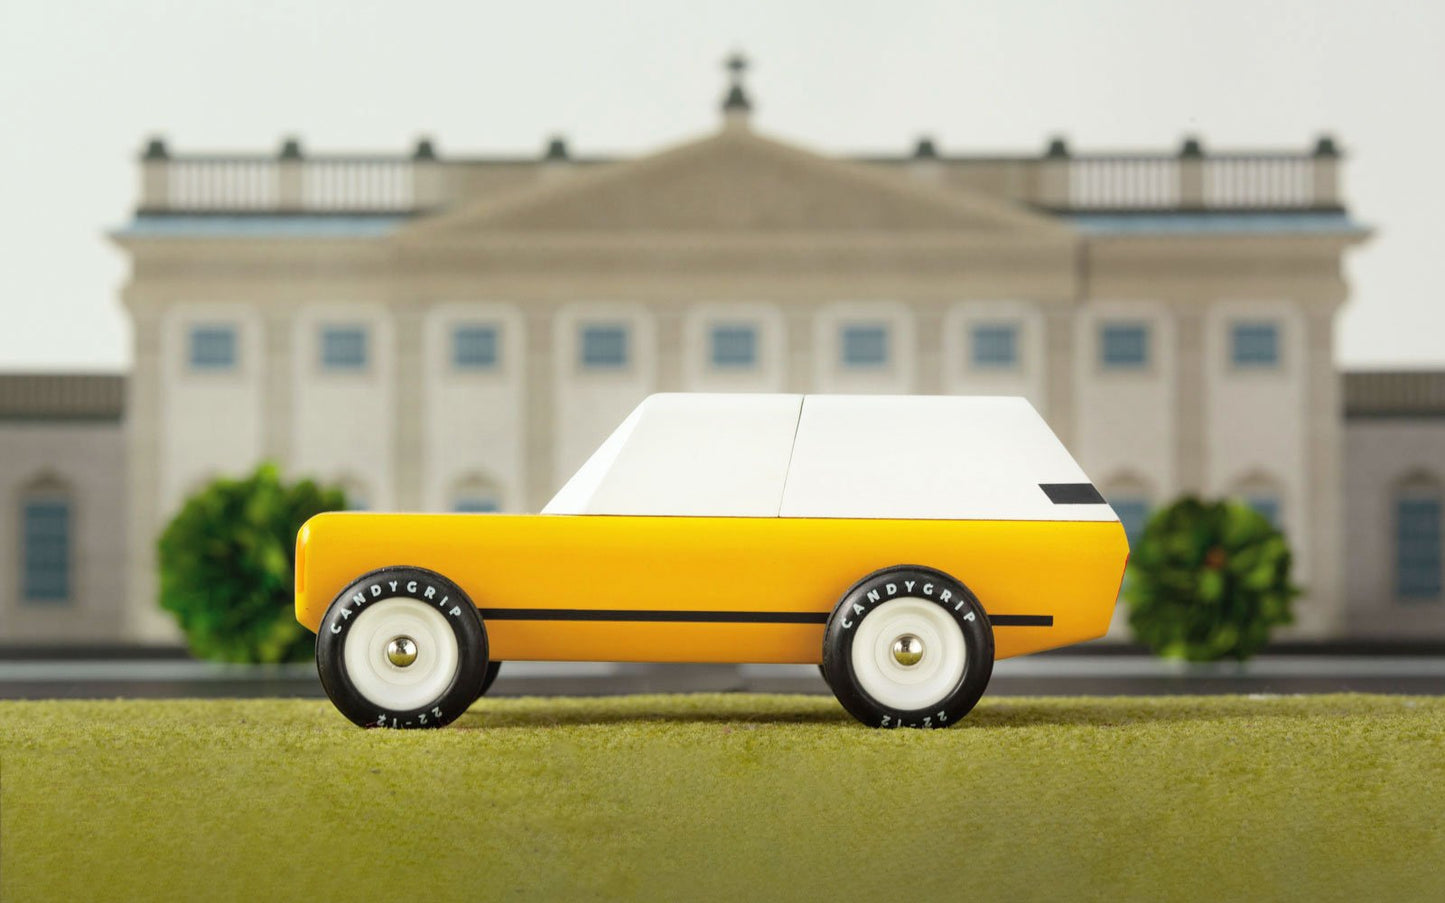 Candylab Toys Cotswold Gold - Modern Vintage Classic SUV